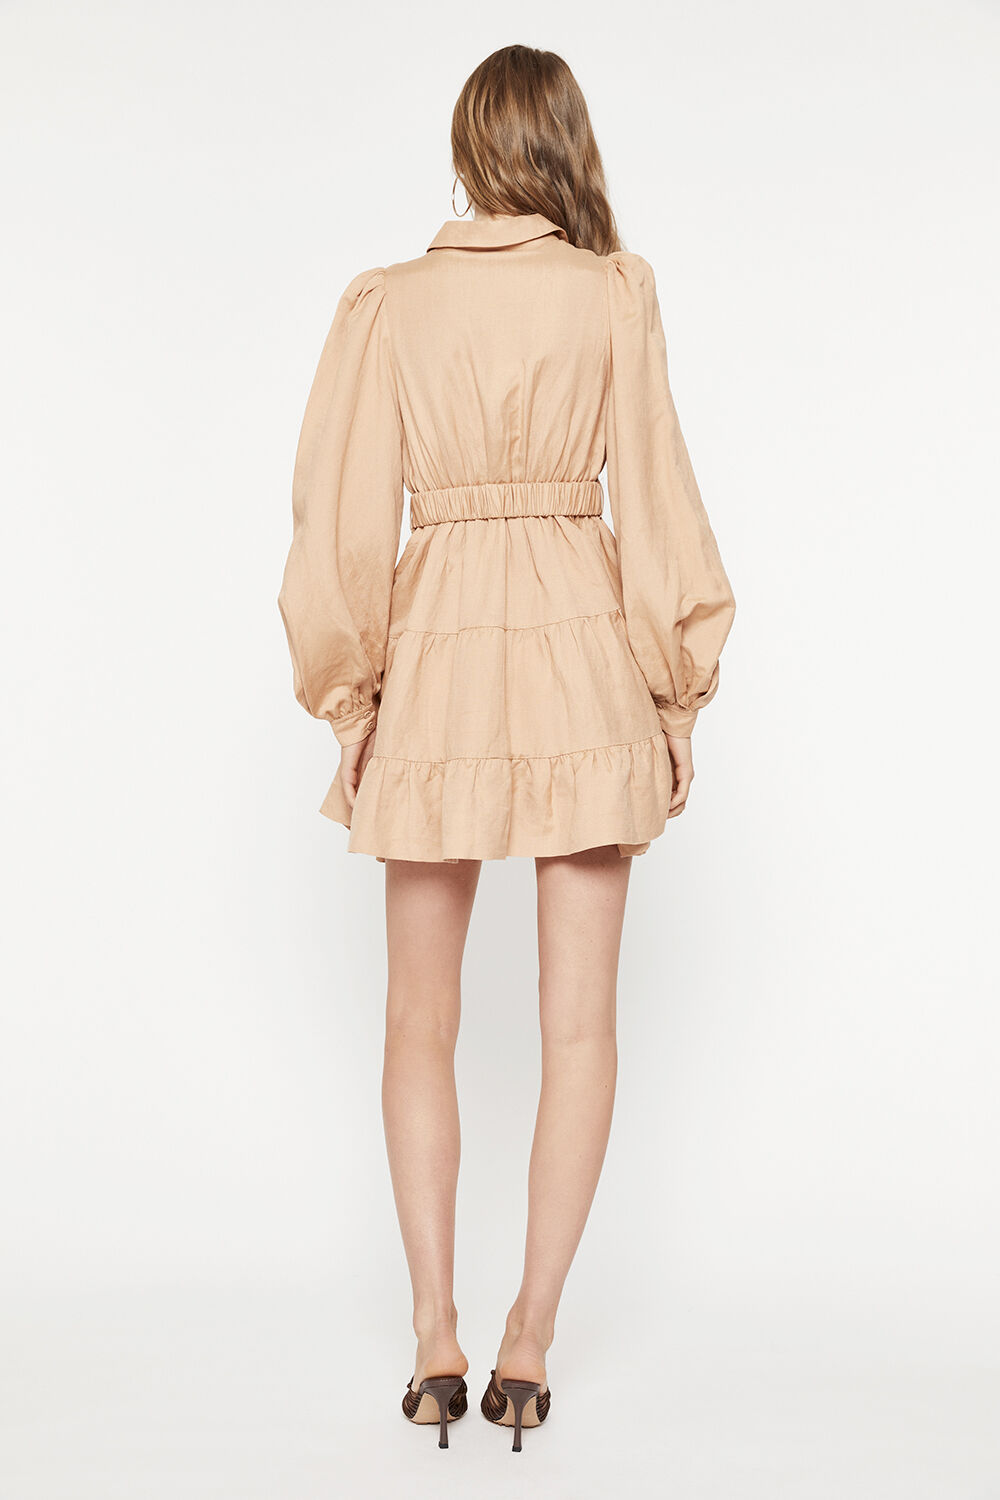 The Mini Shirt Dress in Tan | Bardot